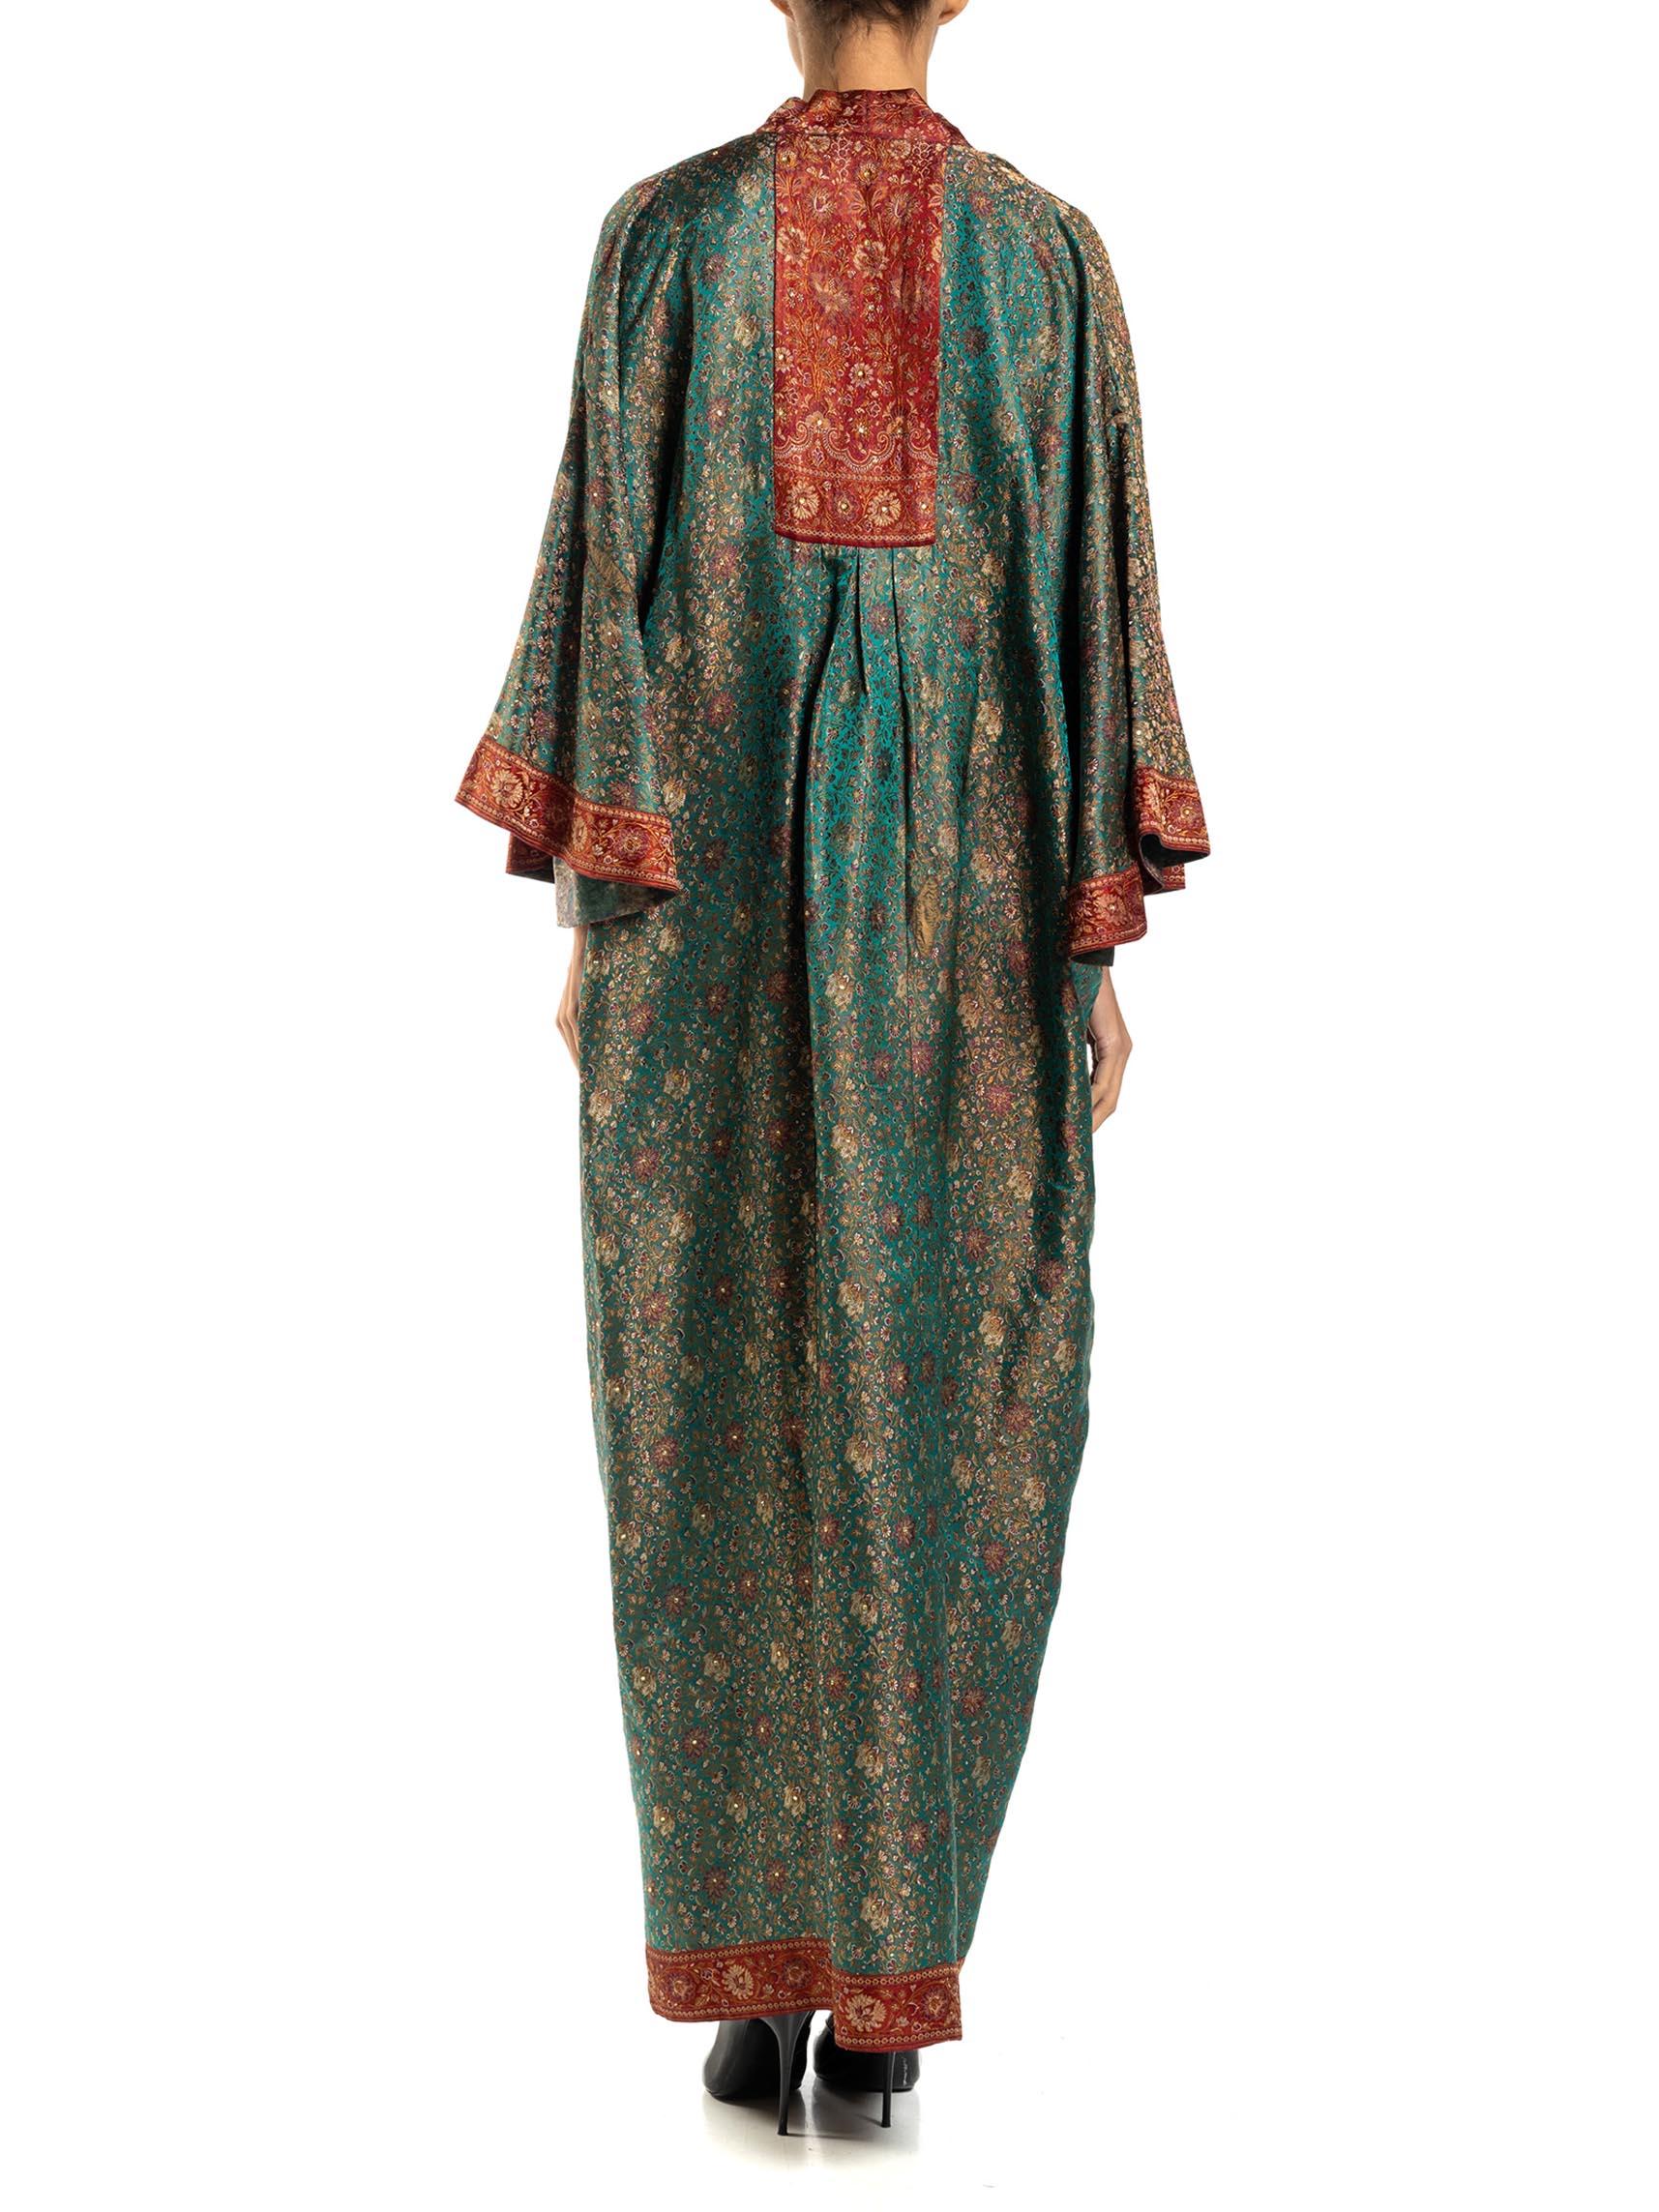 MORPHEW COLLECTION Teal & Burgundy Floral Silk Studded Kaftan Made From Vintage For Sale 3